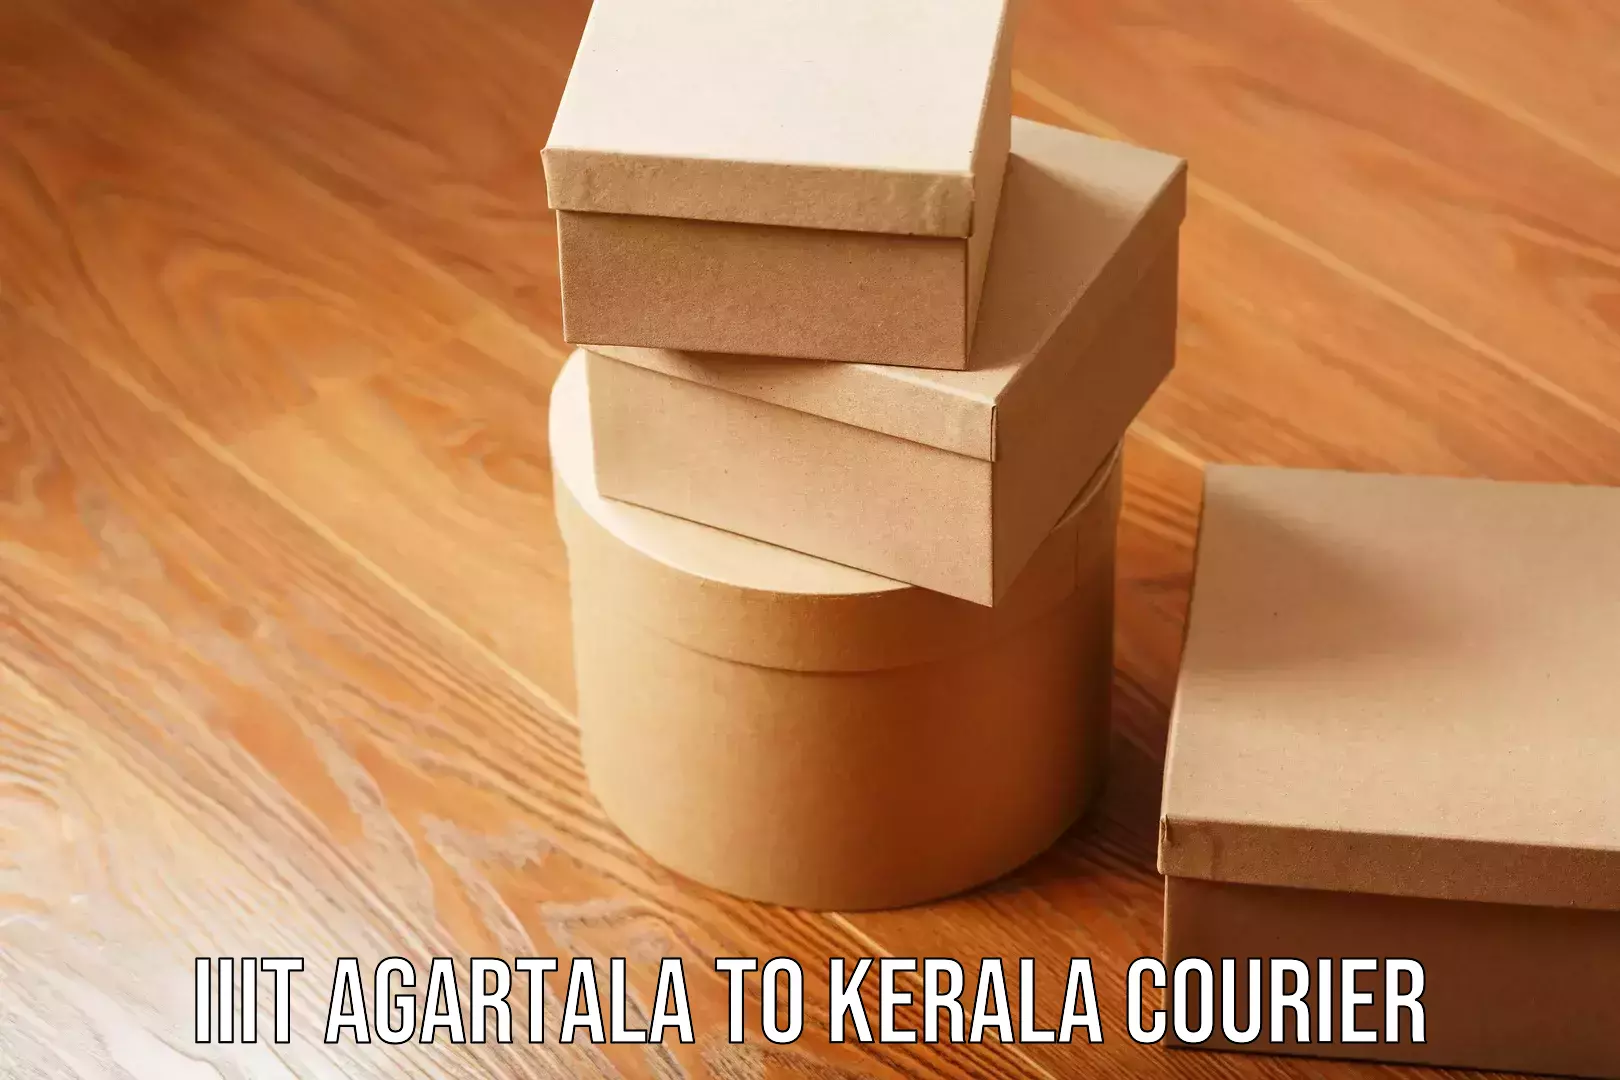 Courier service booking in IIIT Agartala to Kerala